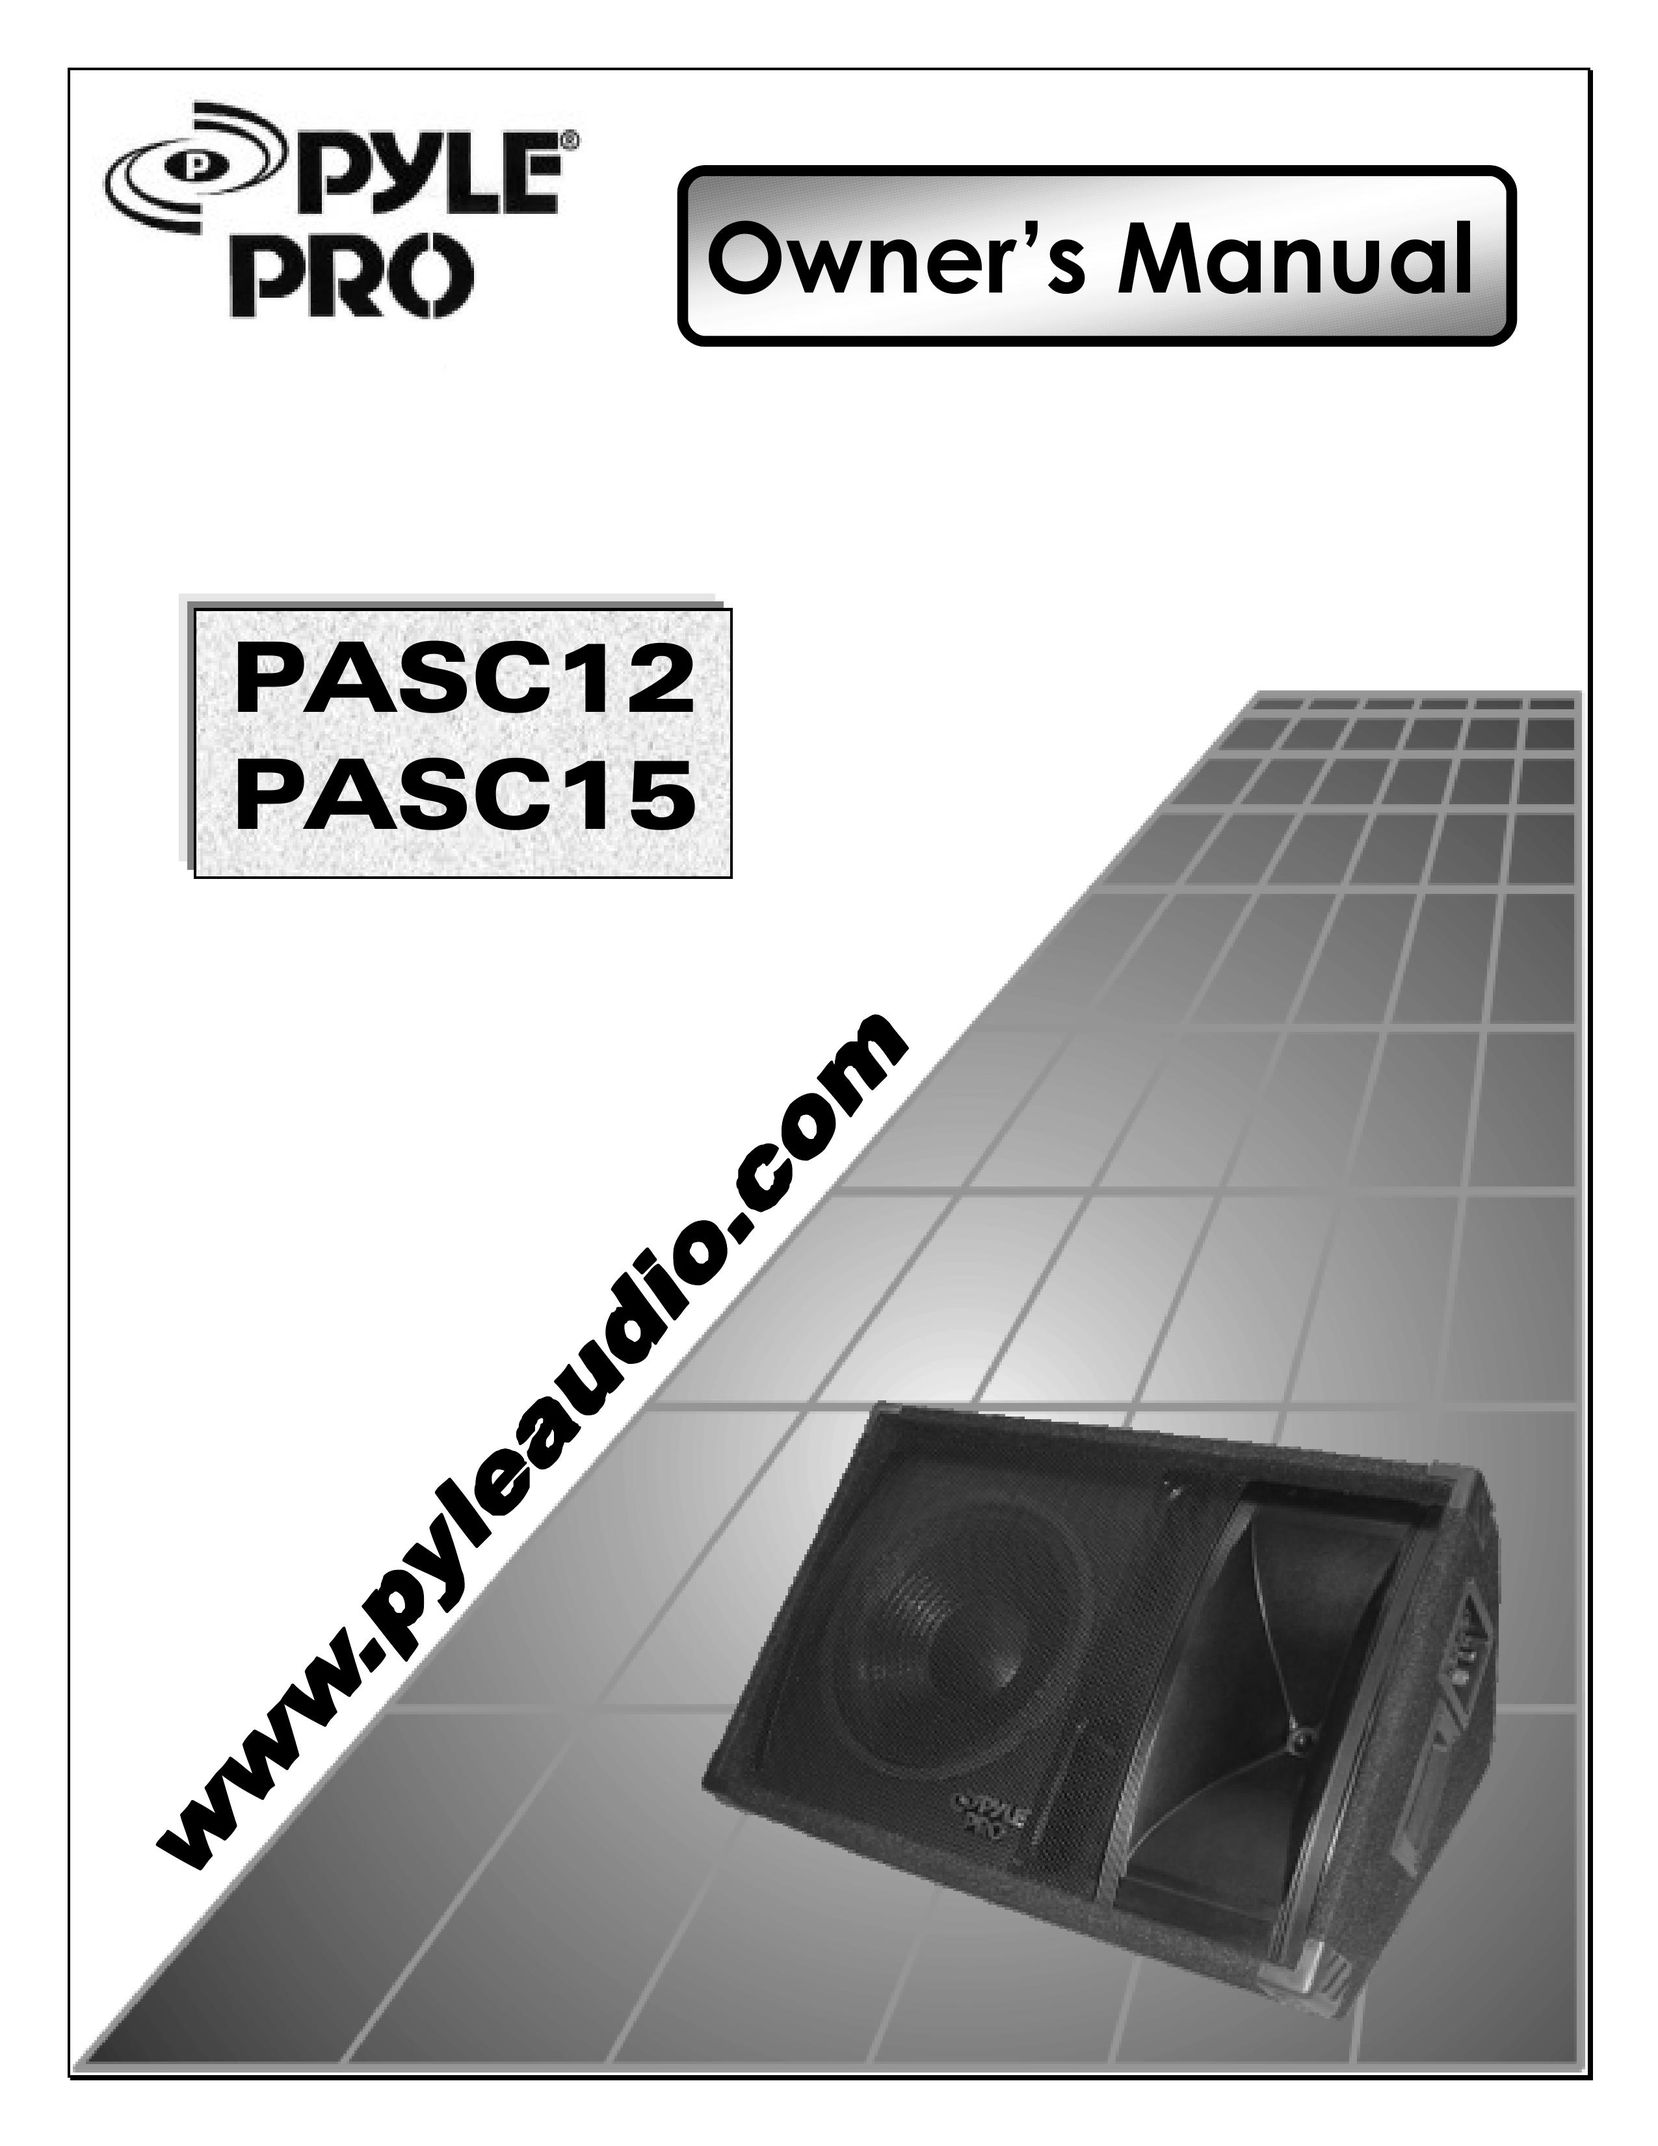 Radio Shack PASC12 Speaker User Manual